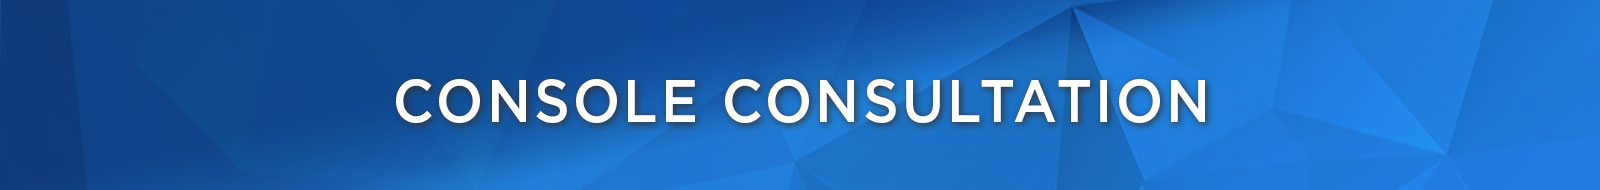 Console Consultation